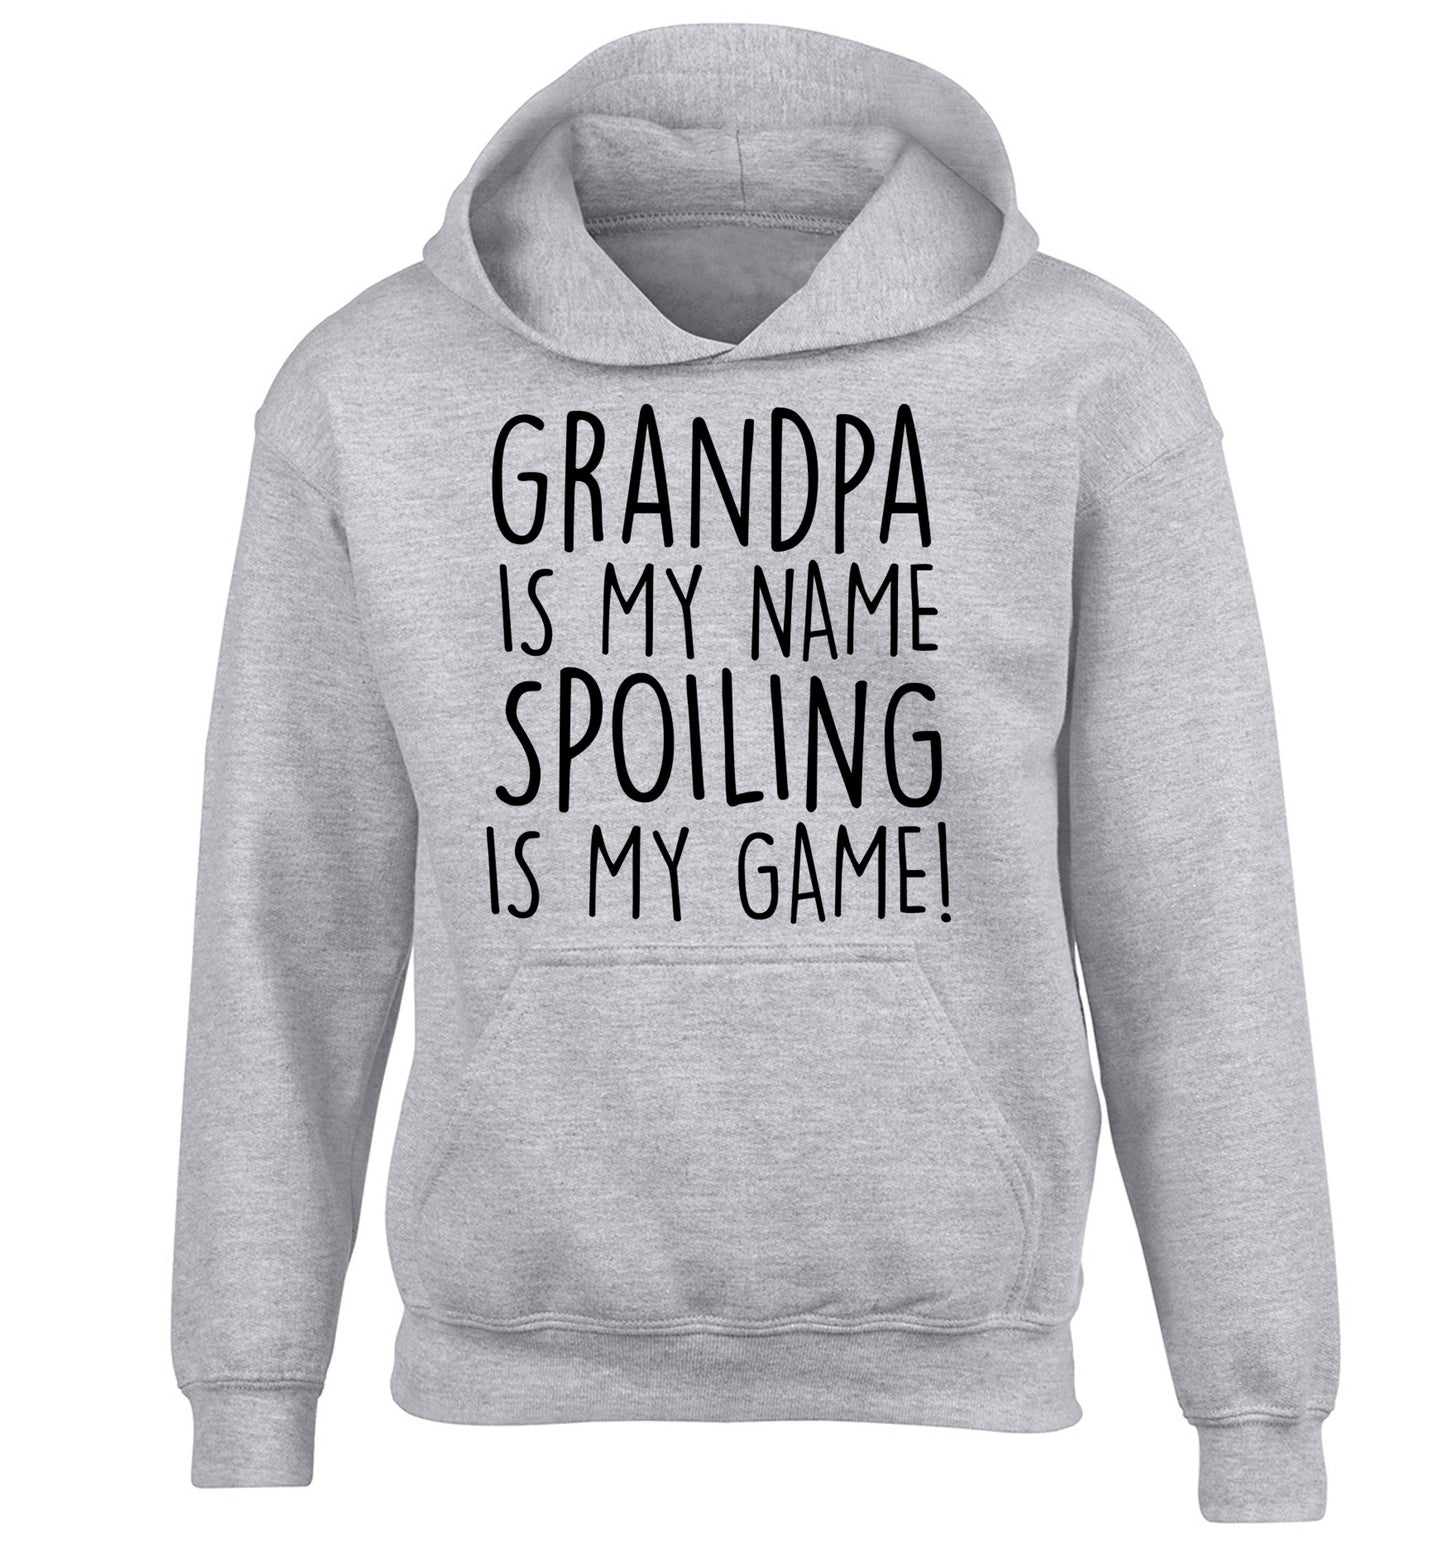 Grandpa is my name, spoiling is my game children's grey hoodie 12-14 Years